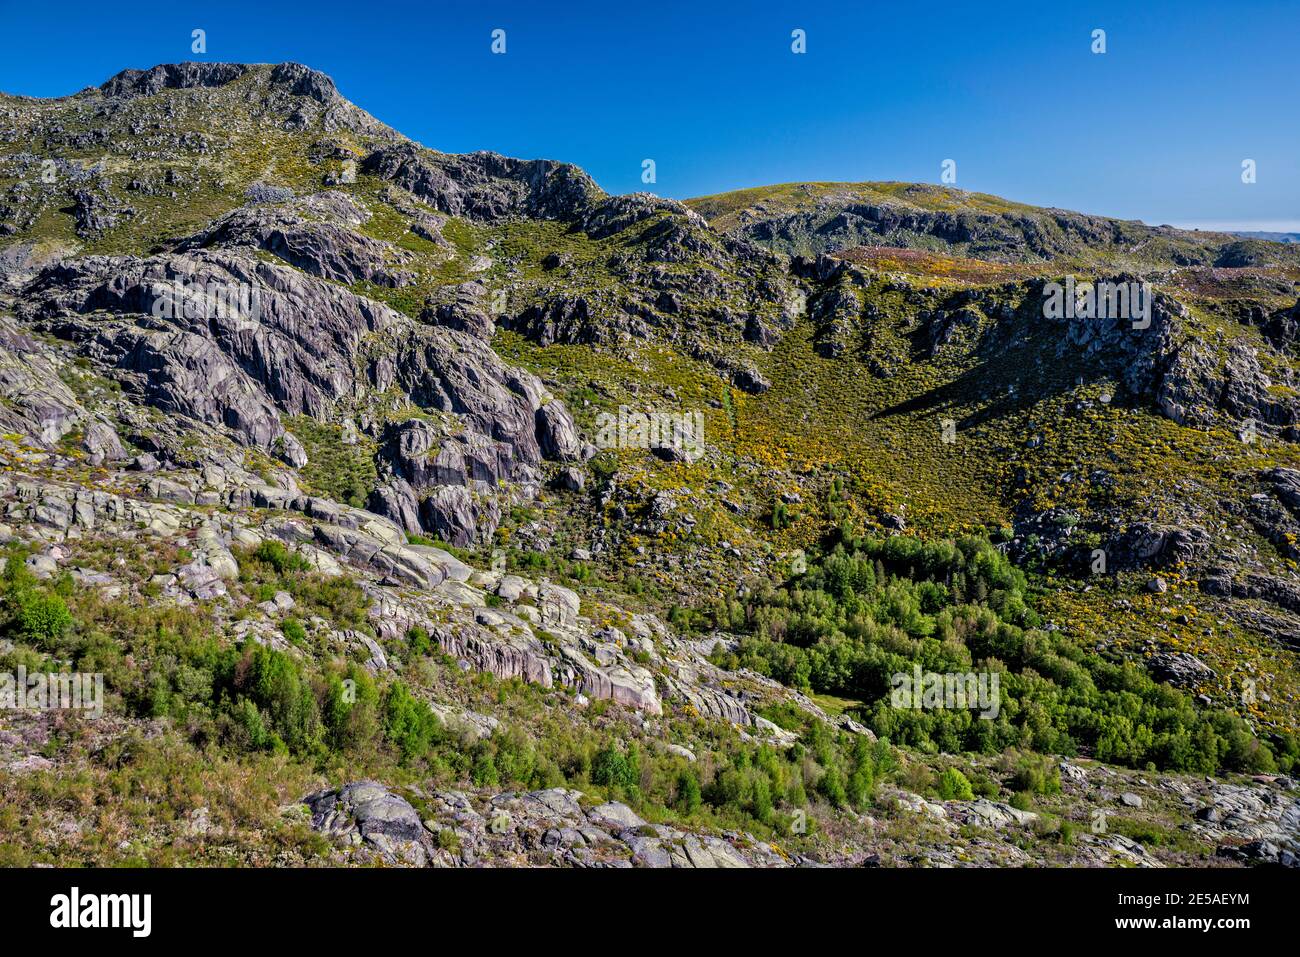 Glacial riegels, granite bedrock exposed by glacial erosion, Covao Ametade glacial cirque, Cantaro Gordo, Serra da Estrela Natural Park, Portugal Stock Photo